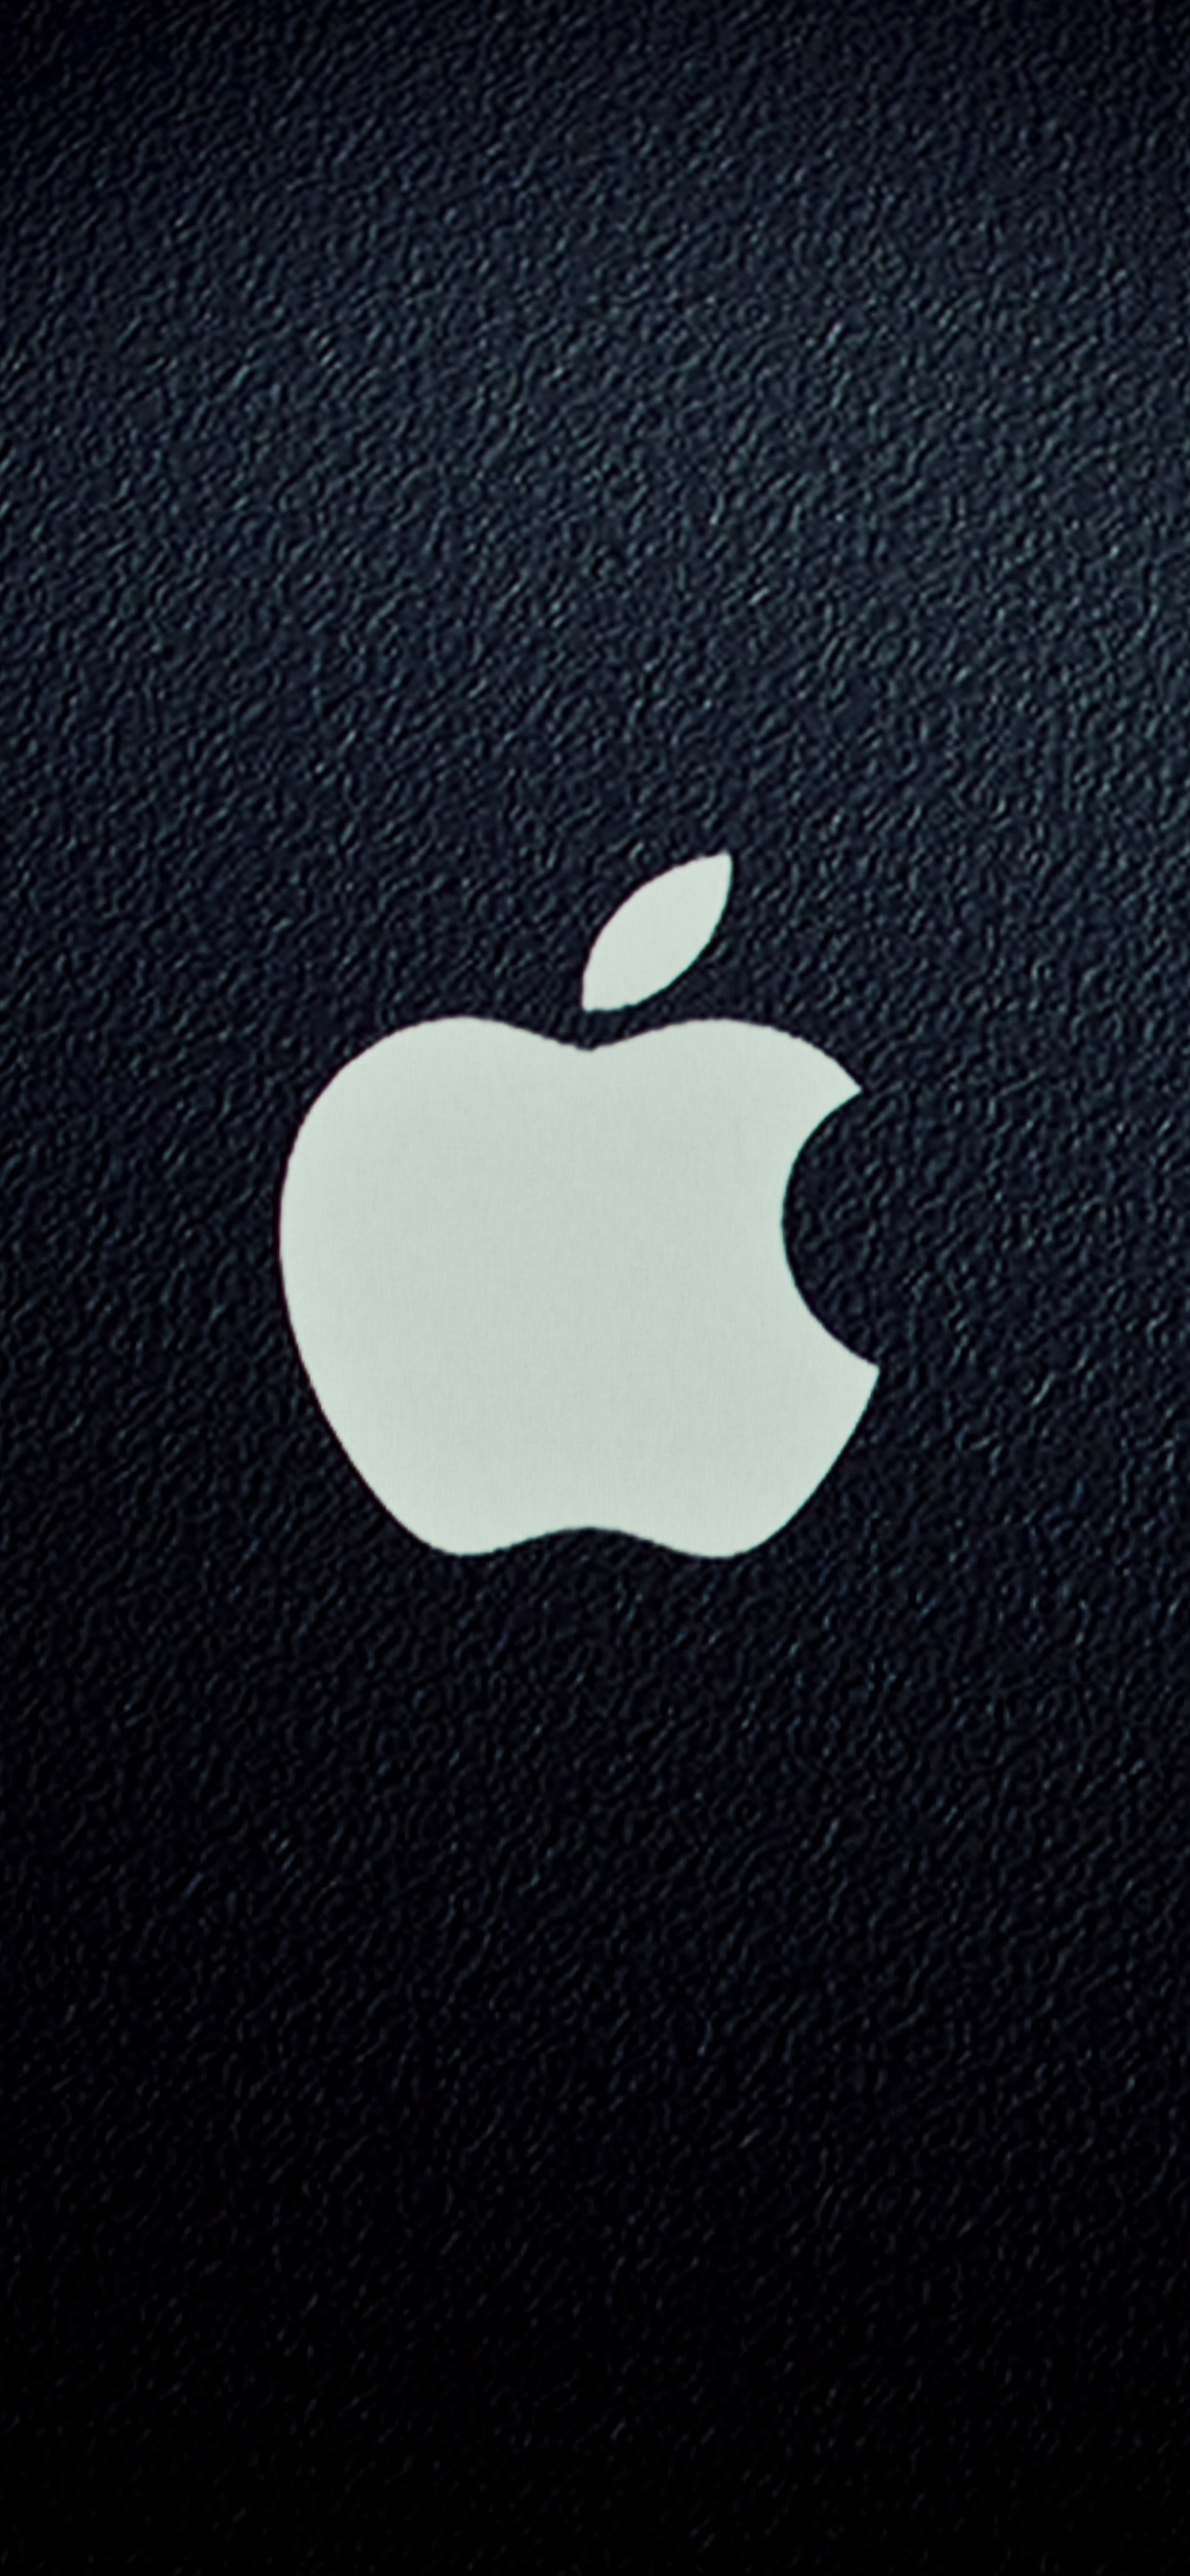 Apple, Logo, Graphics, Black, Smartphone. Wallpaper in 1242x2688 Resolution